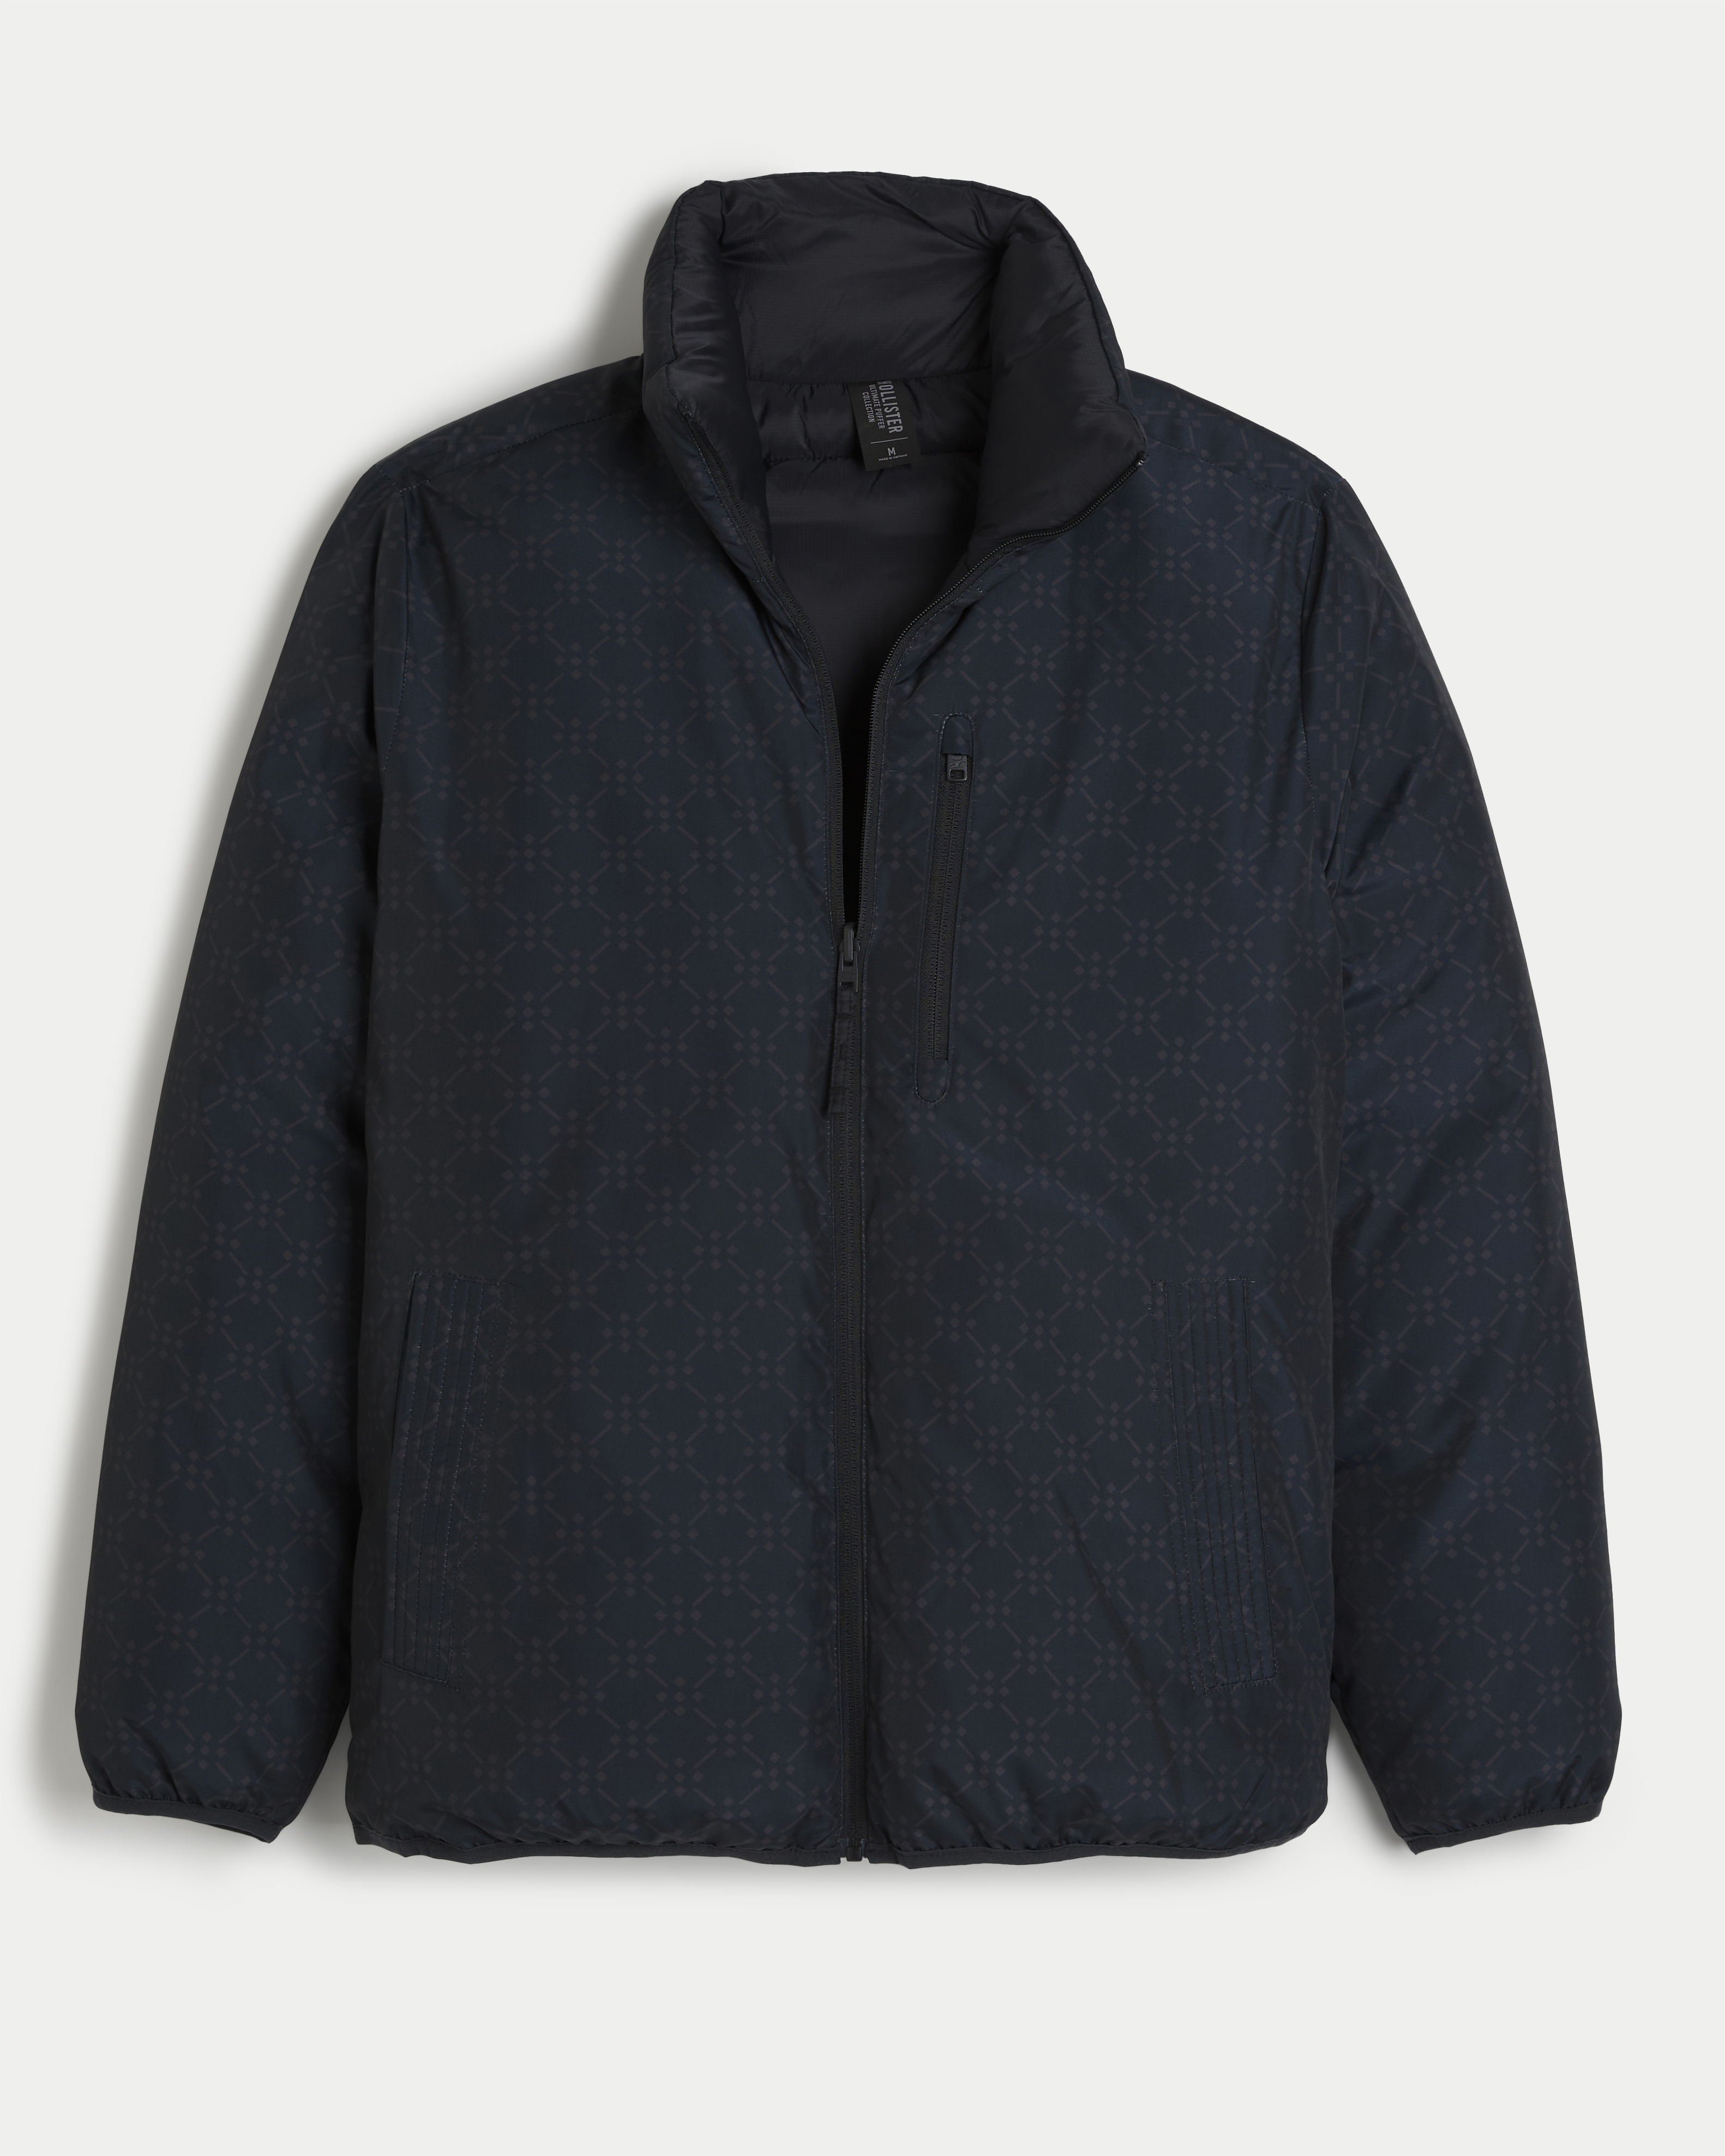 Hollister mockneck lightweight puffer jacket in navy